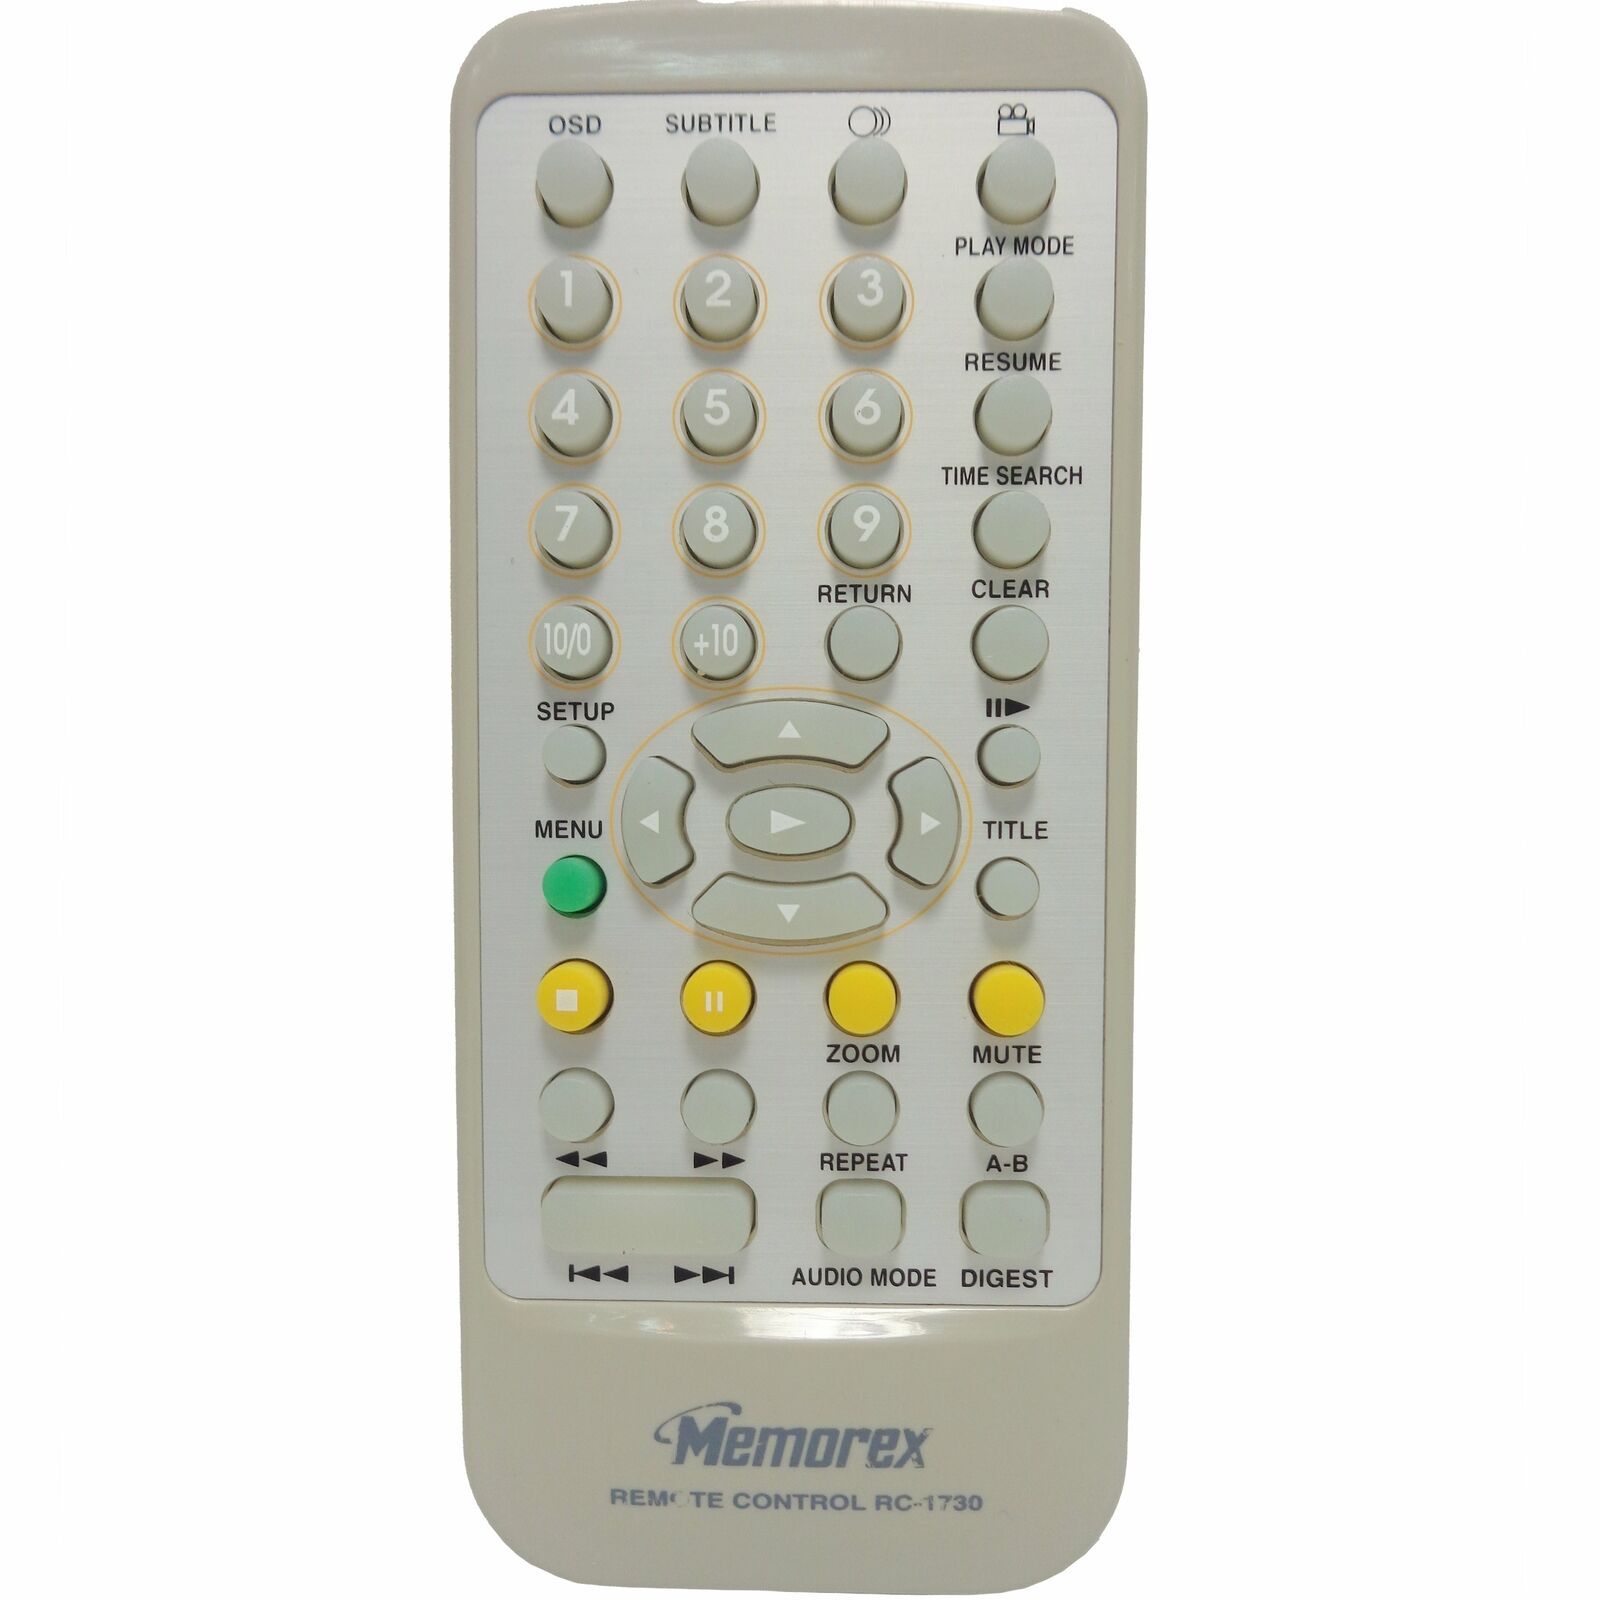 Memorex RC-1730 Factory Original DVD Player Remote For Memorex MM7000, MM8000 - $10.89